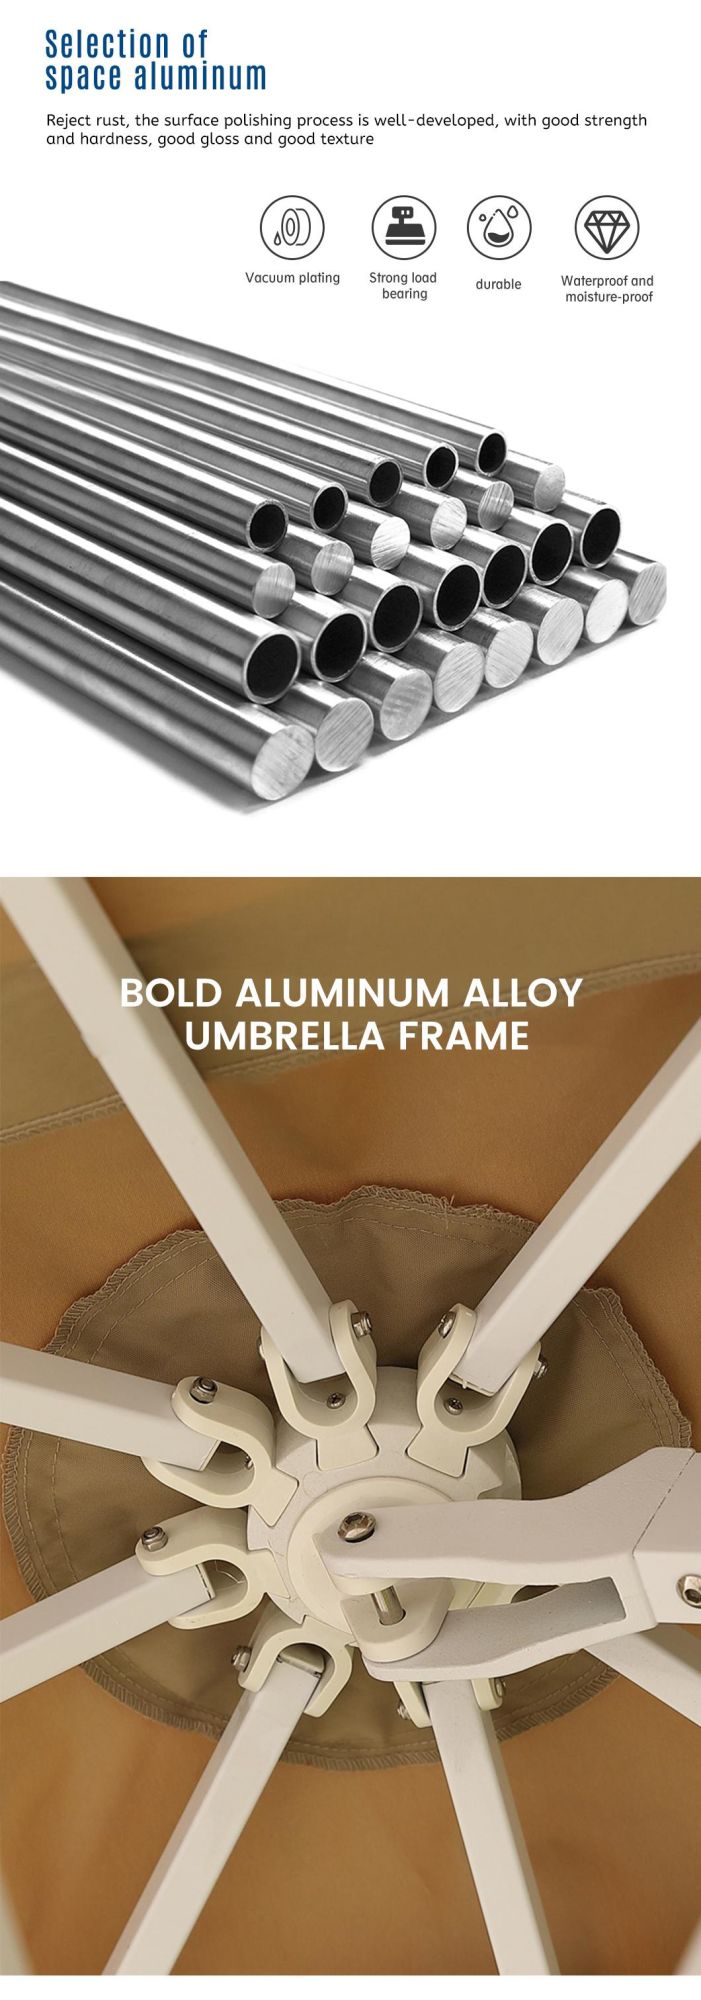 Factory New Design Luxury Iron MID Rod Hydraulic Leaf Umbrella